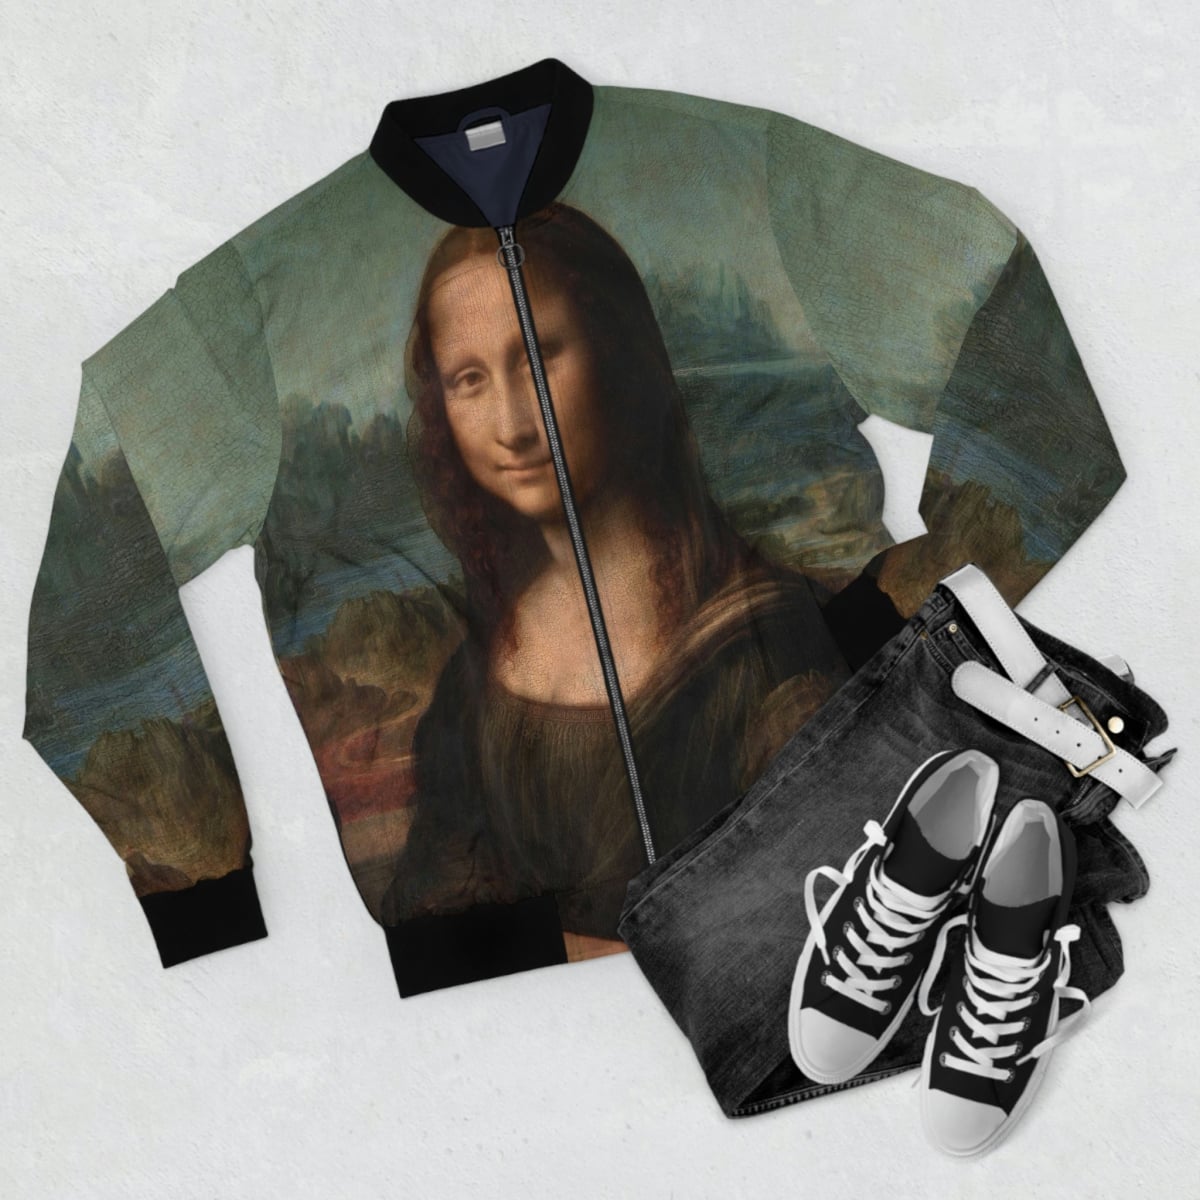 The Mona Lisa by Leonardo da Vinci Art Bomber Jacket